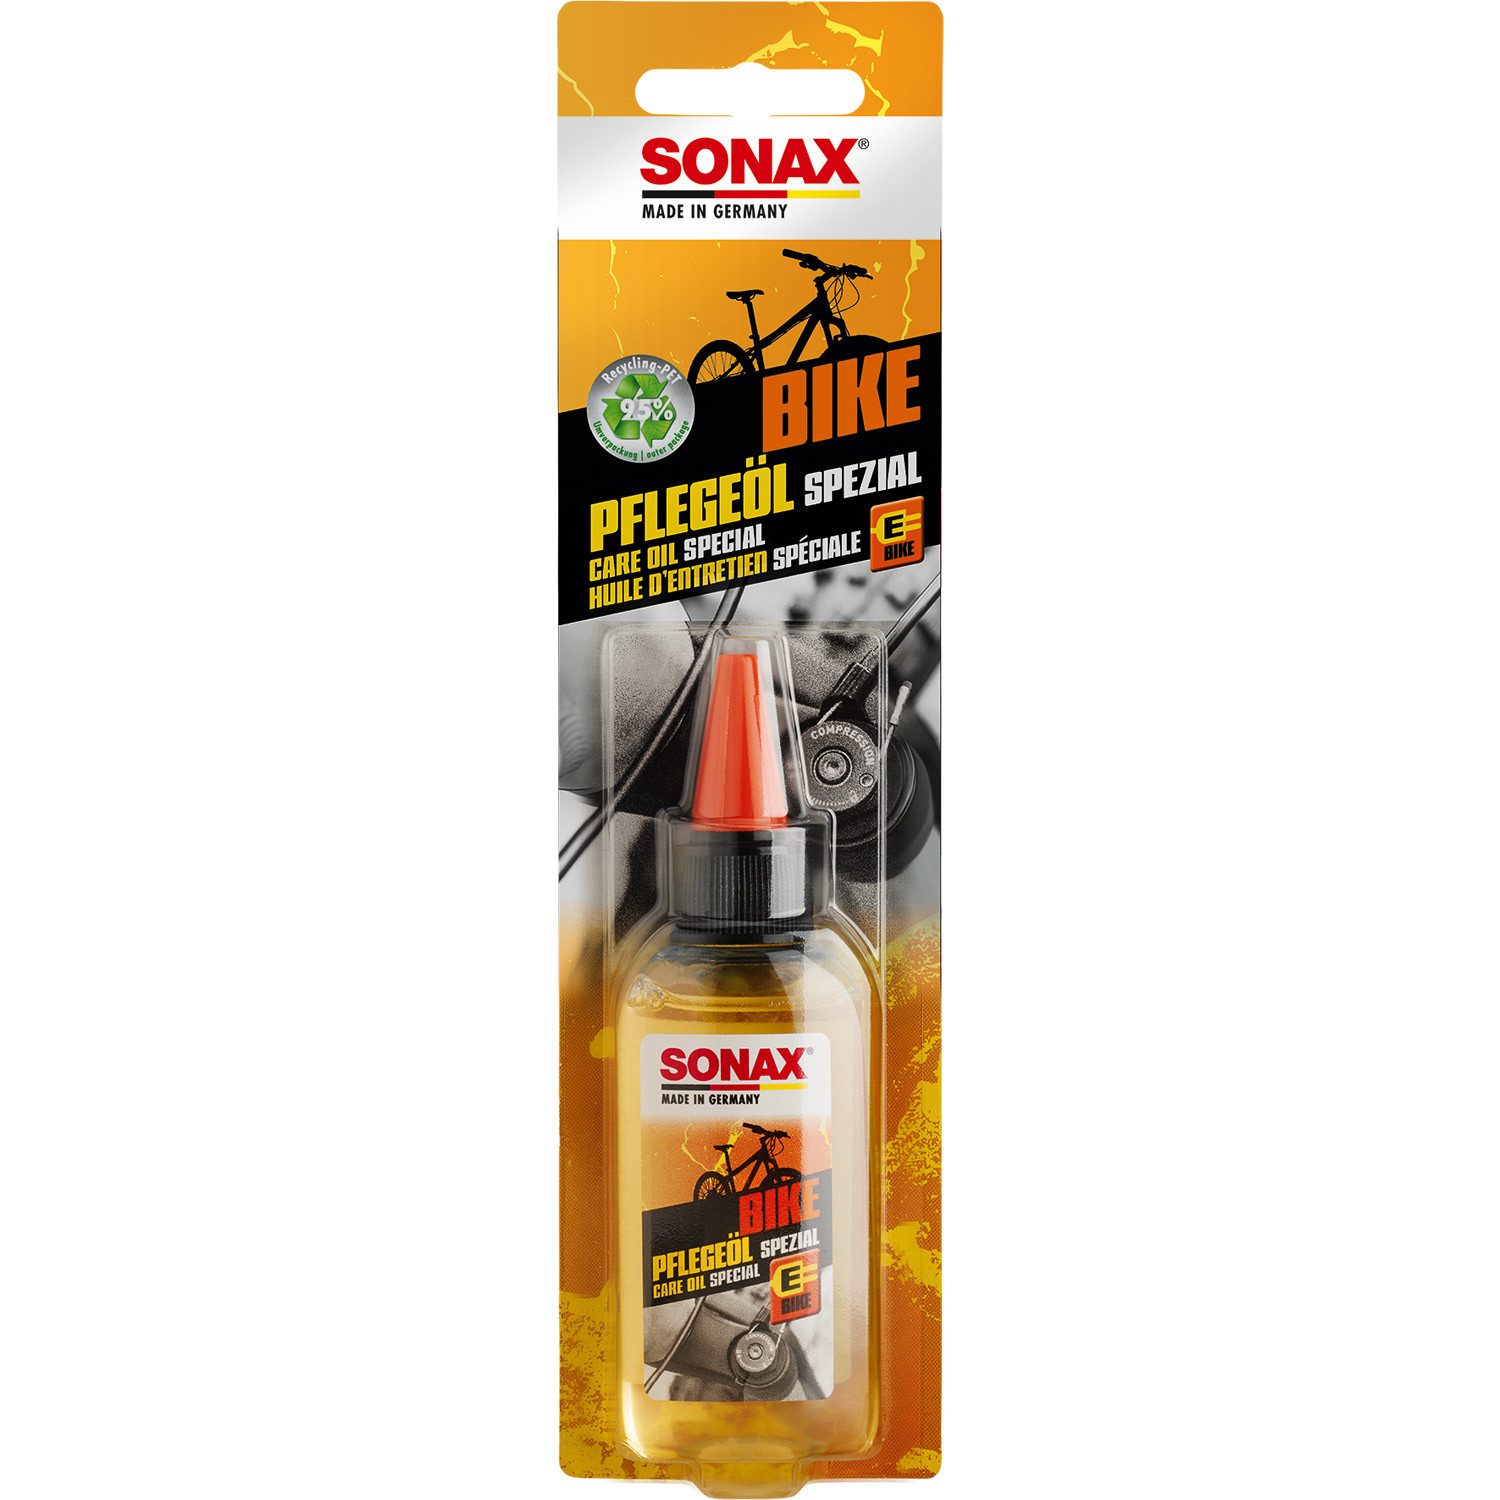 Sonax Fahrradöl BIKE PflegeÖl spezial, 50 ml, Pflegeöl auf Naturölbasis